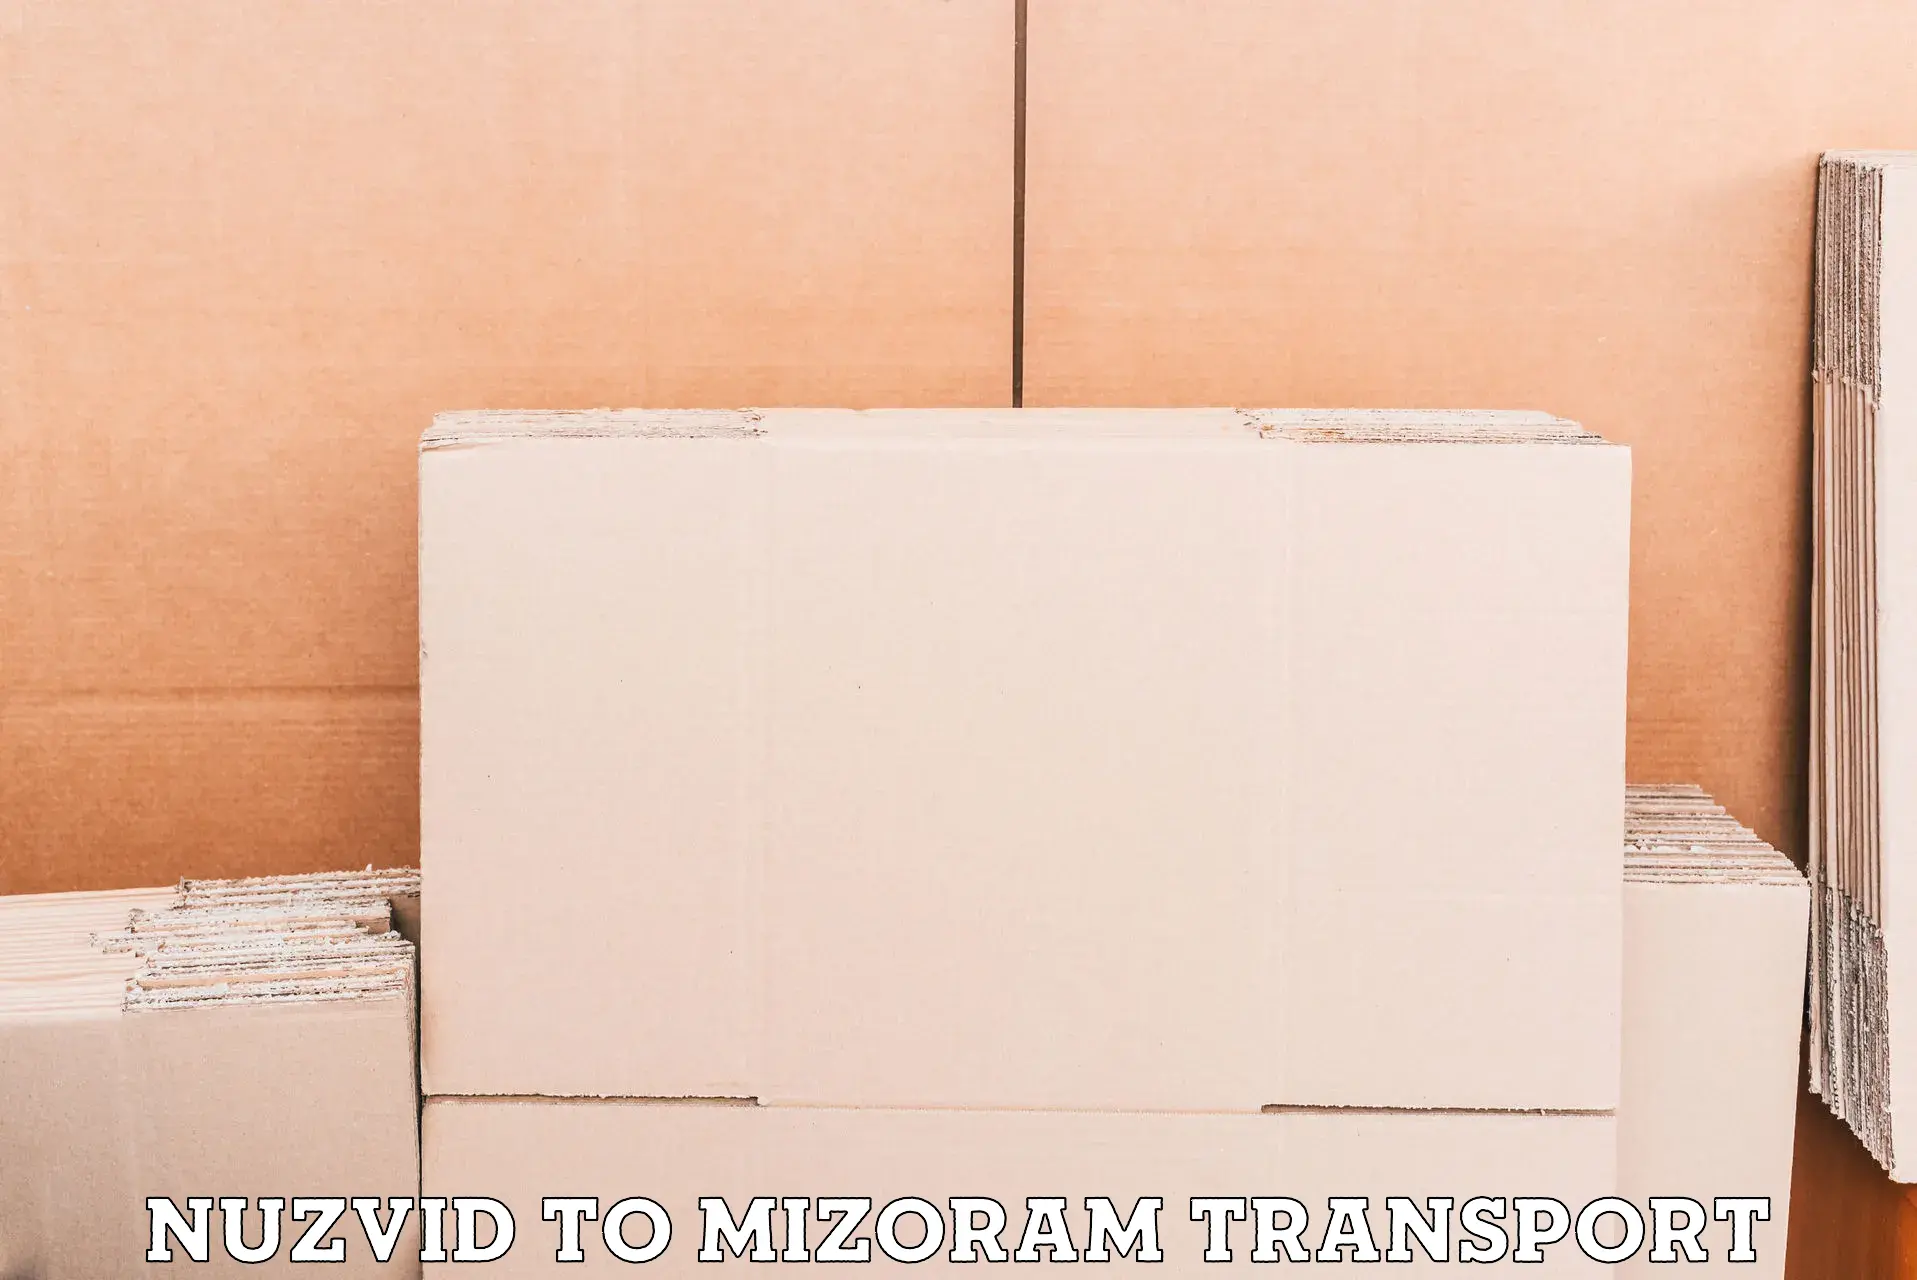 Transport shared services Nuzvid to Mizoram